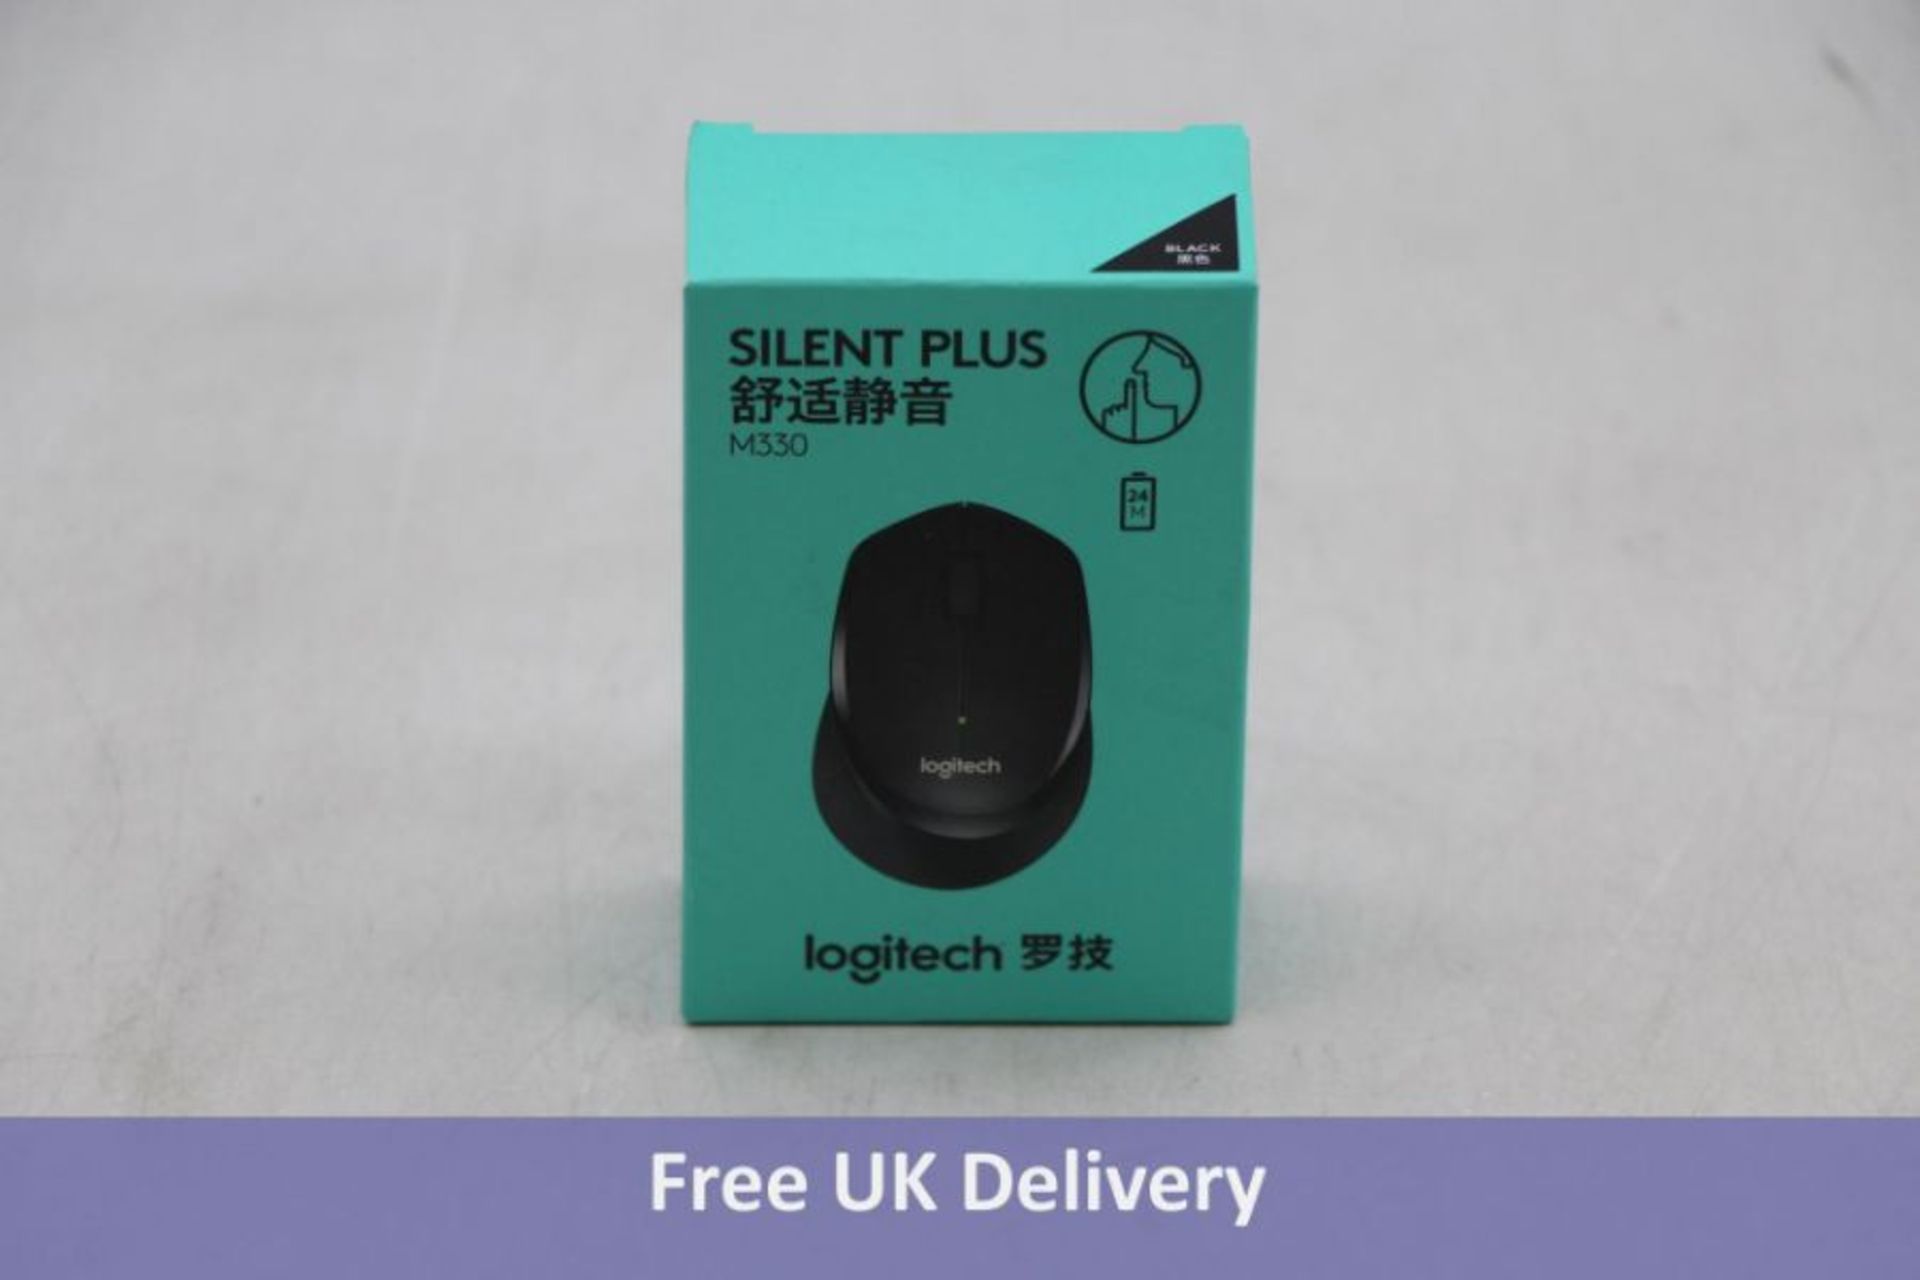 Twenty Logitech M330 Silent Plus Wireless Mice, Black